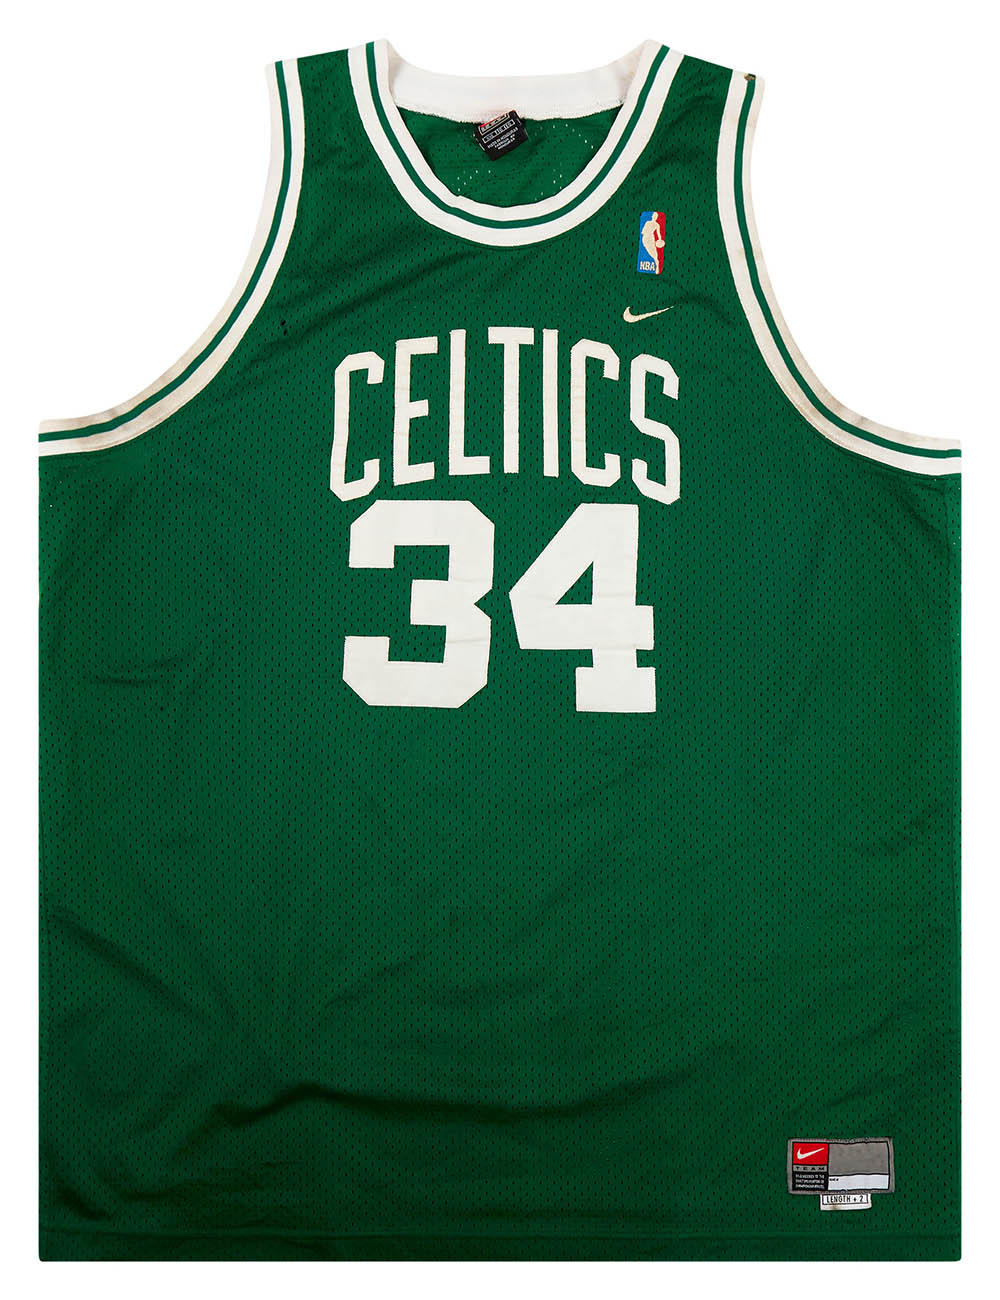 NIKE Authentic SWINGMAN NBA Parquet Jersey Size 44 Boston Celtics